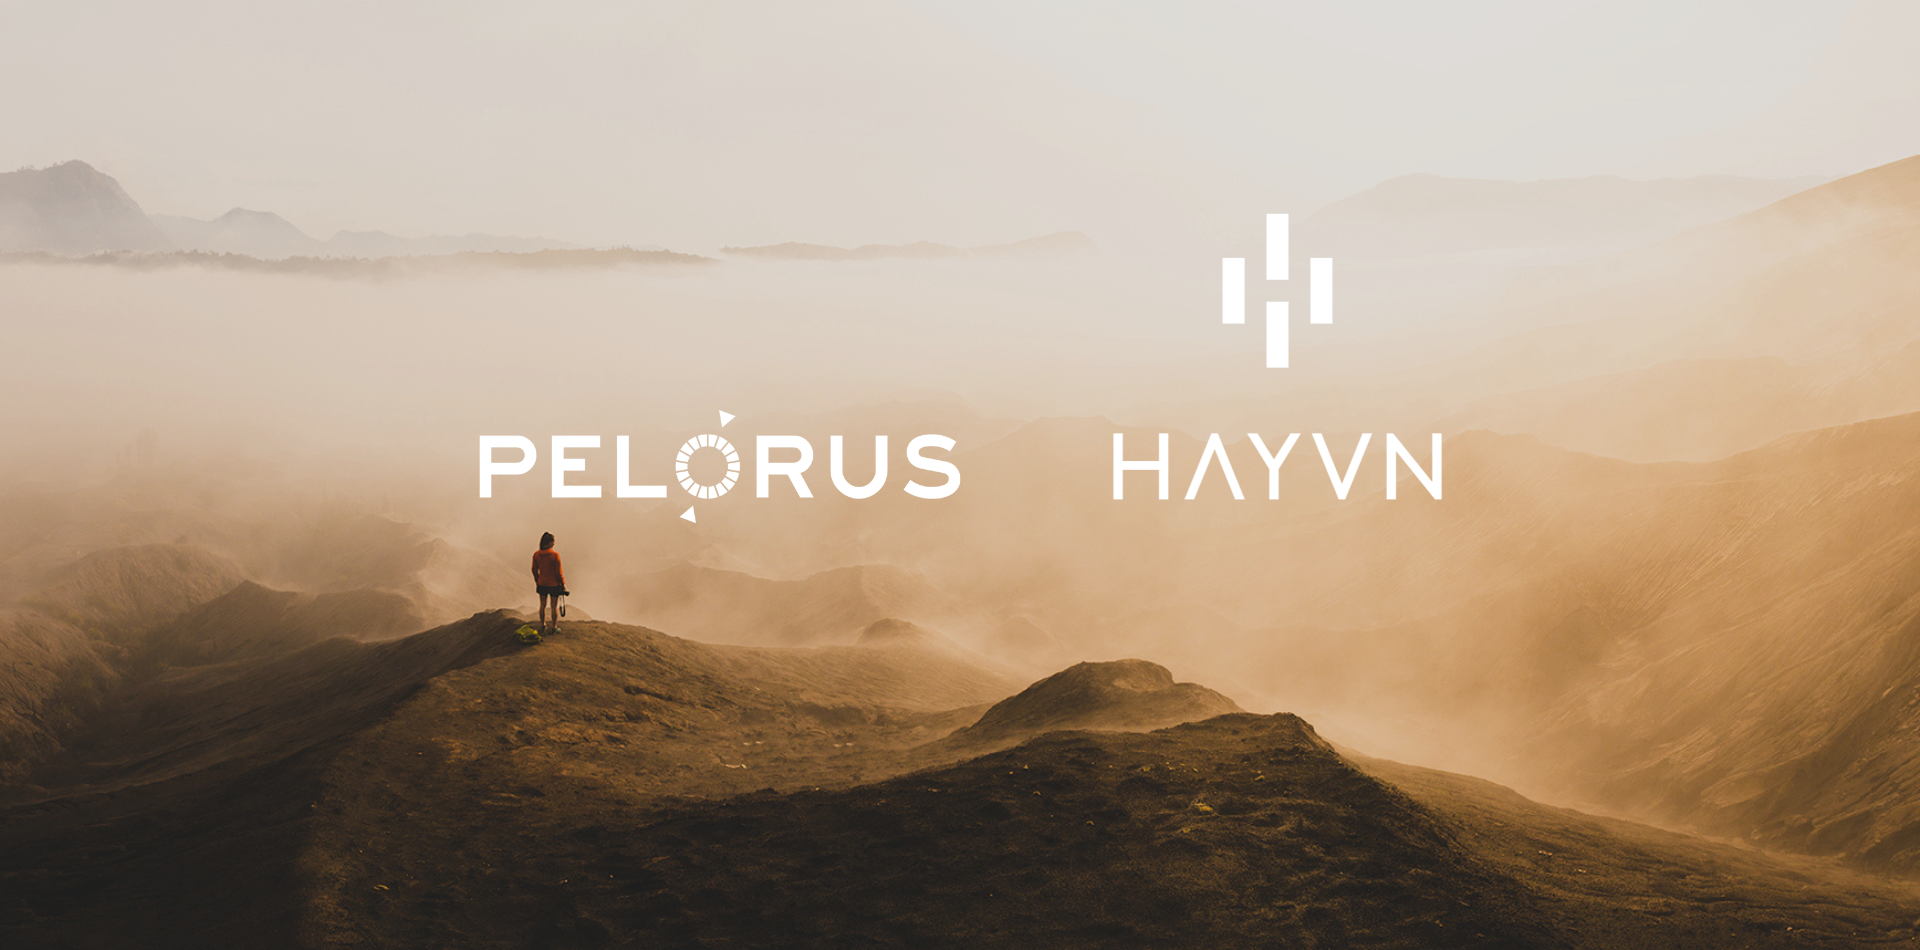 Pelorus HAYVN cryptocurrency launch